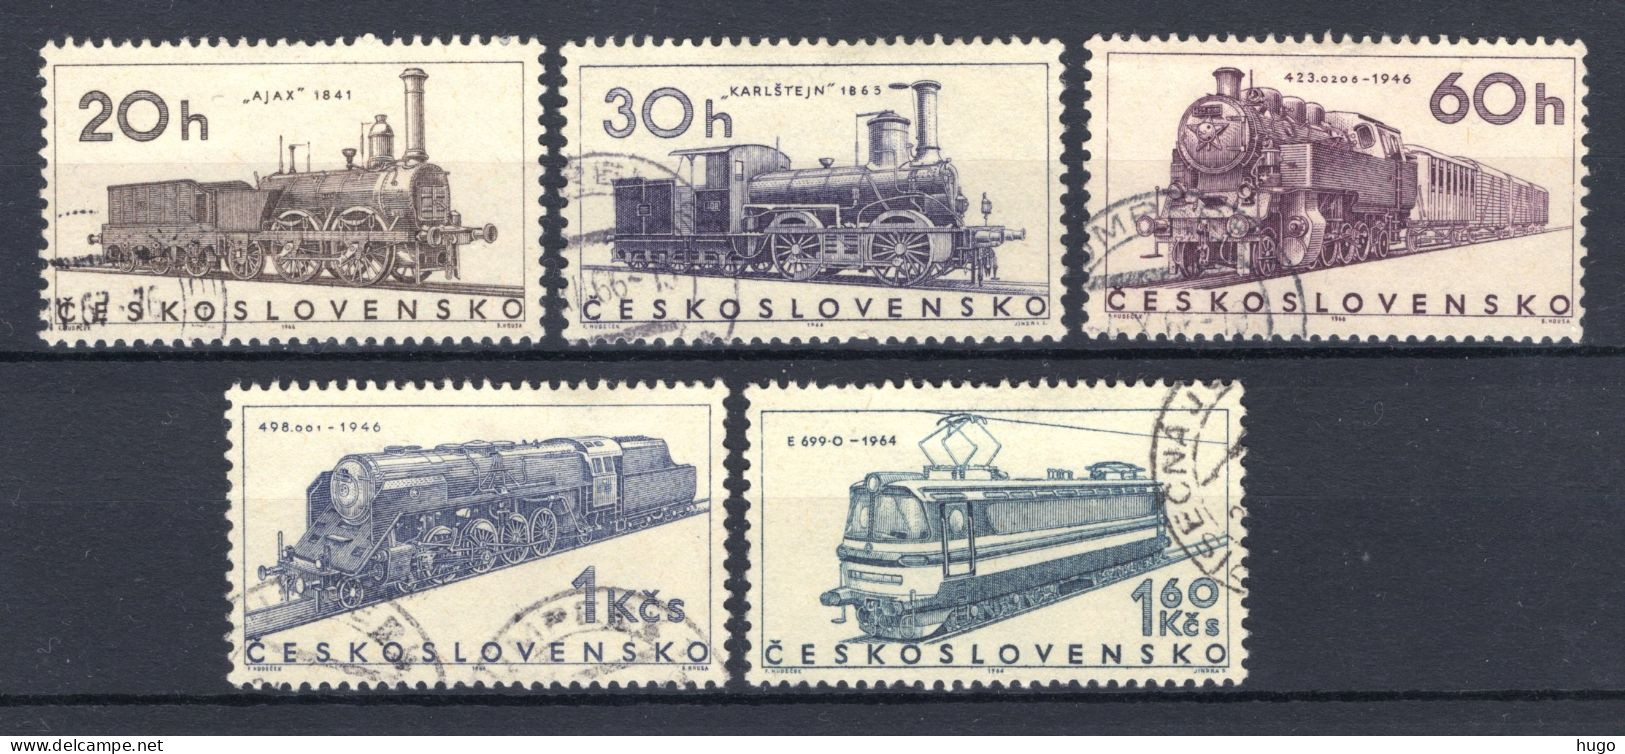 TSJECHOSLOVAKIJE Yt. 1467/1471° Gestempeld 1966 - Used Stamps